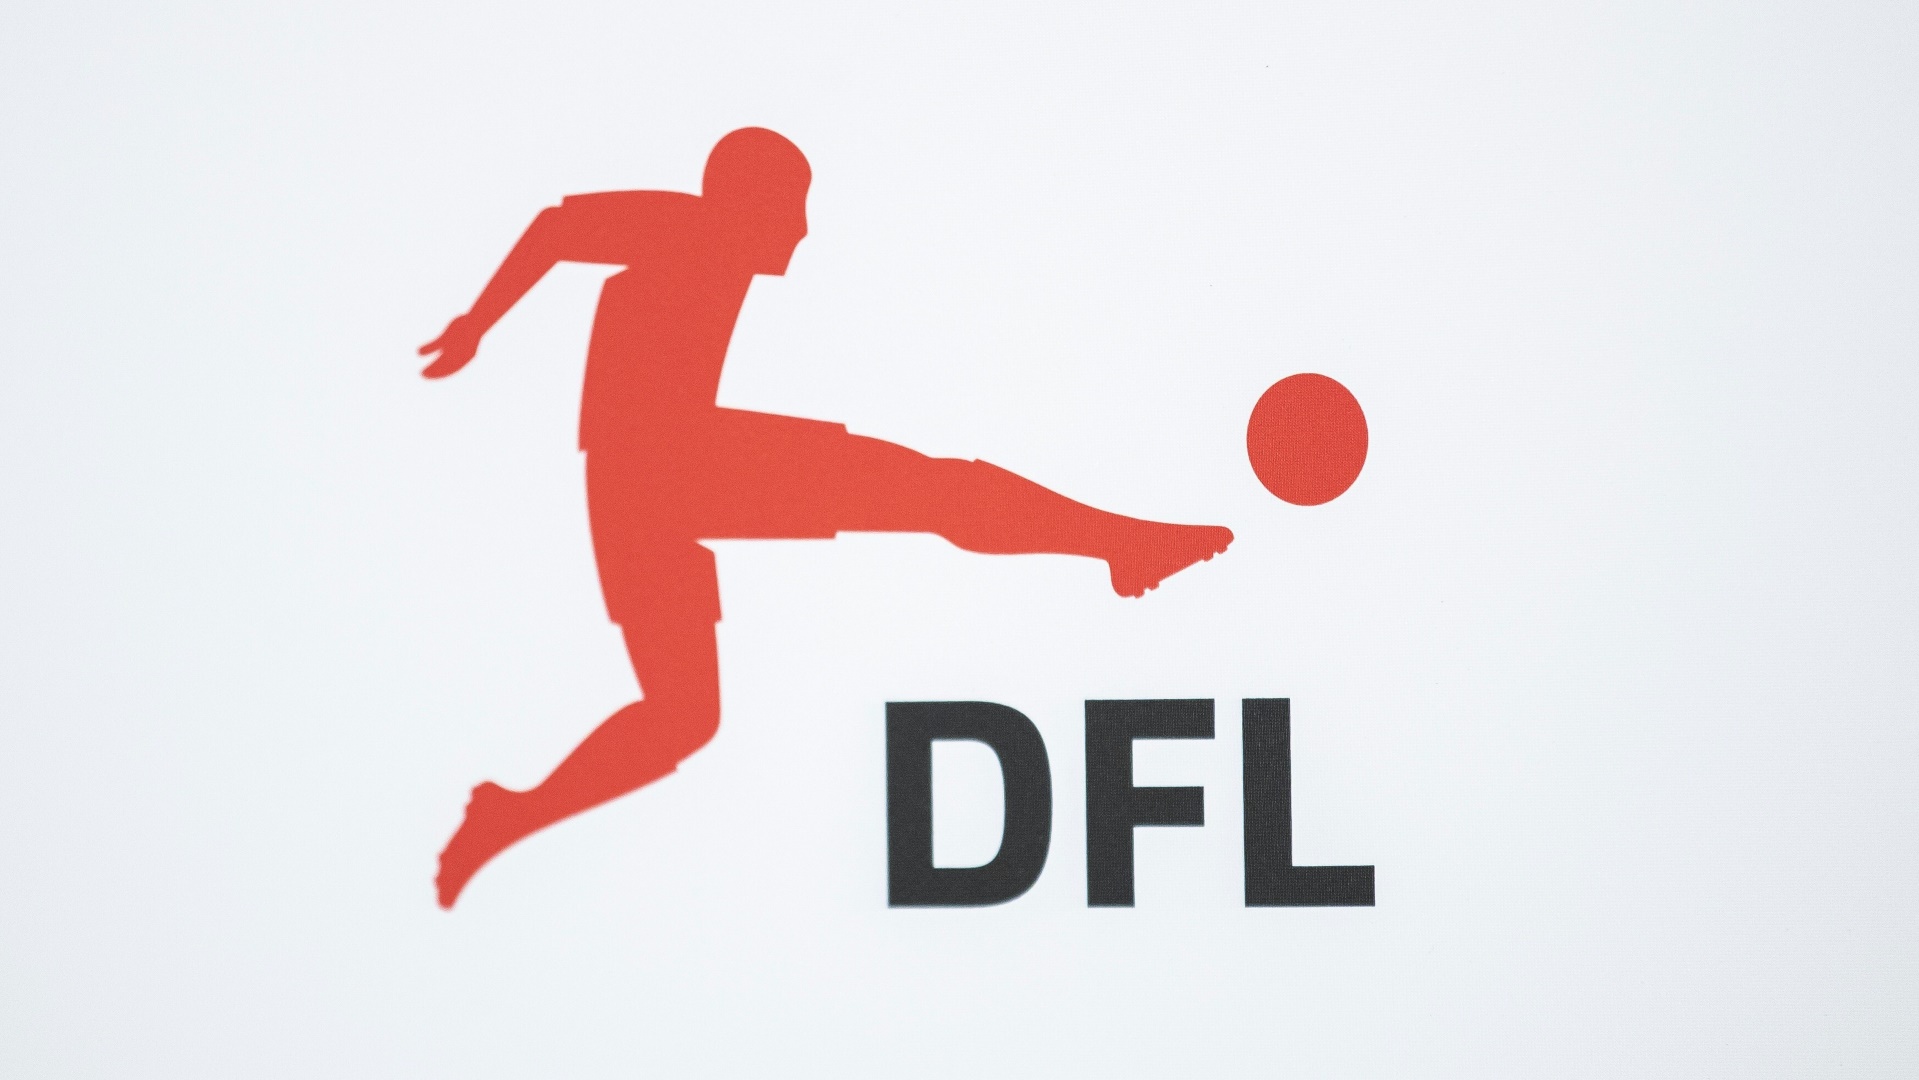 kicker: Bundesliga mit Umsatzrekord